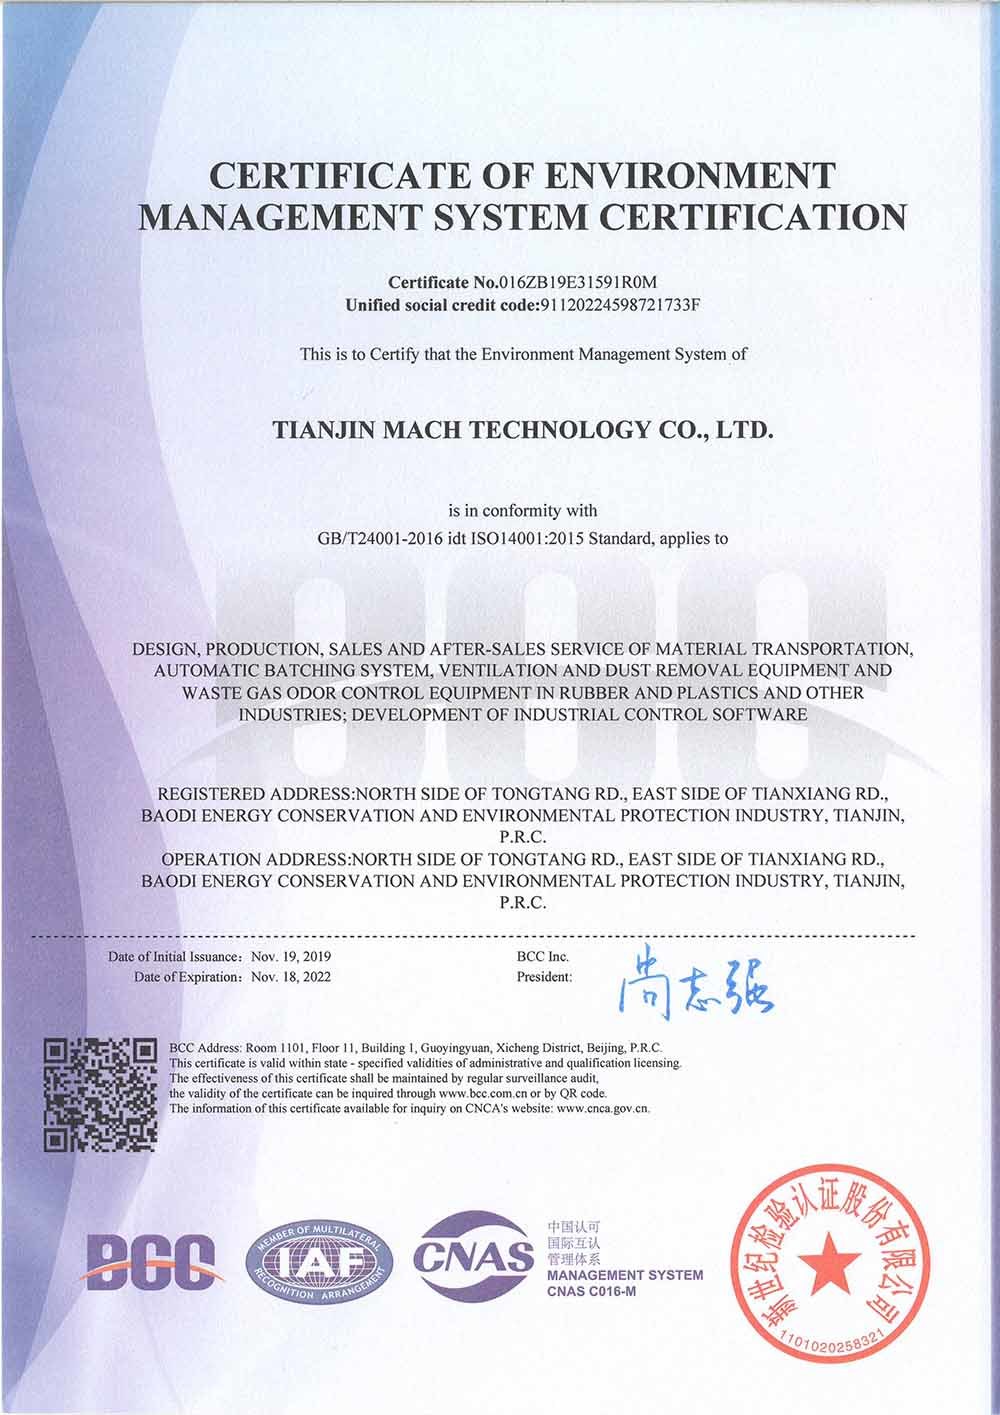 ISO14001:2015 Standard